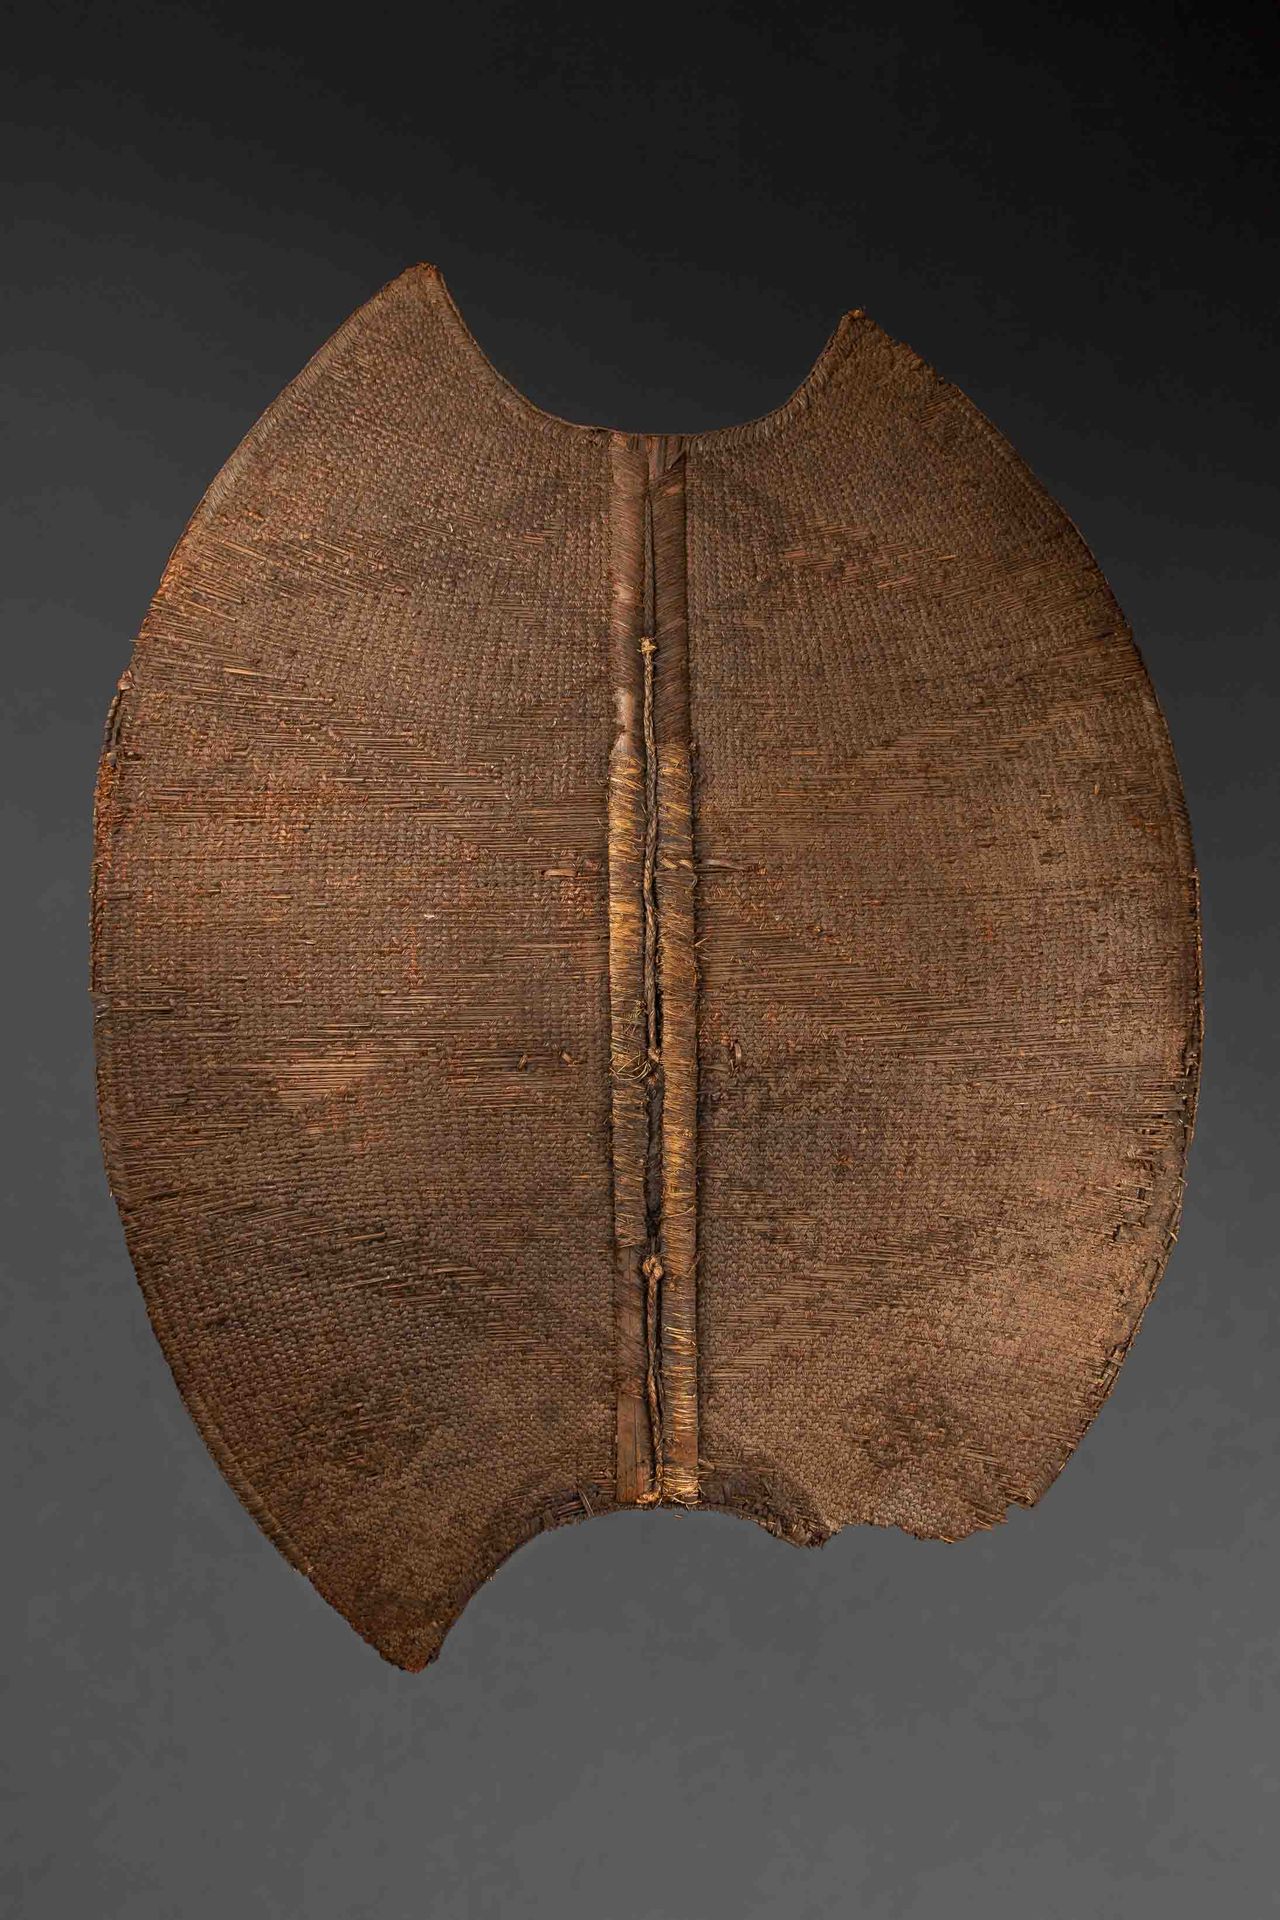 Null Kor盾牌有两根中心肋骨，木质框架上的编织篮子，有古老的光泽和使用的痕迹。喀麦隆曼比拉，20世纪。高度：119厘米